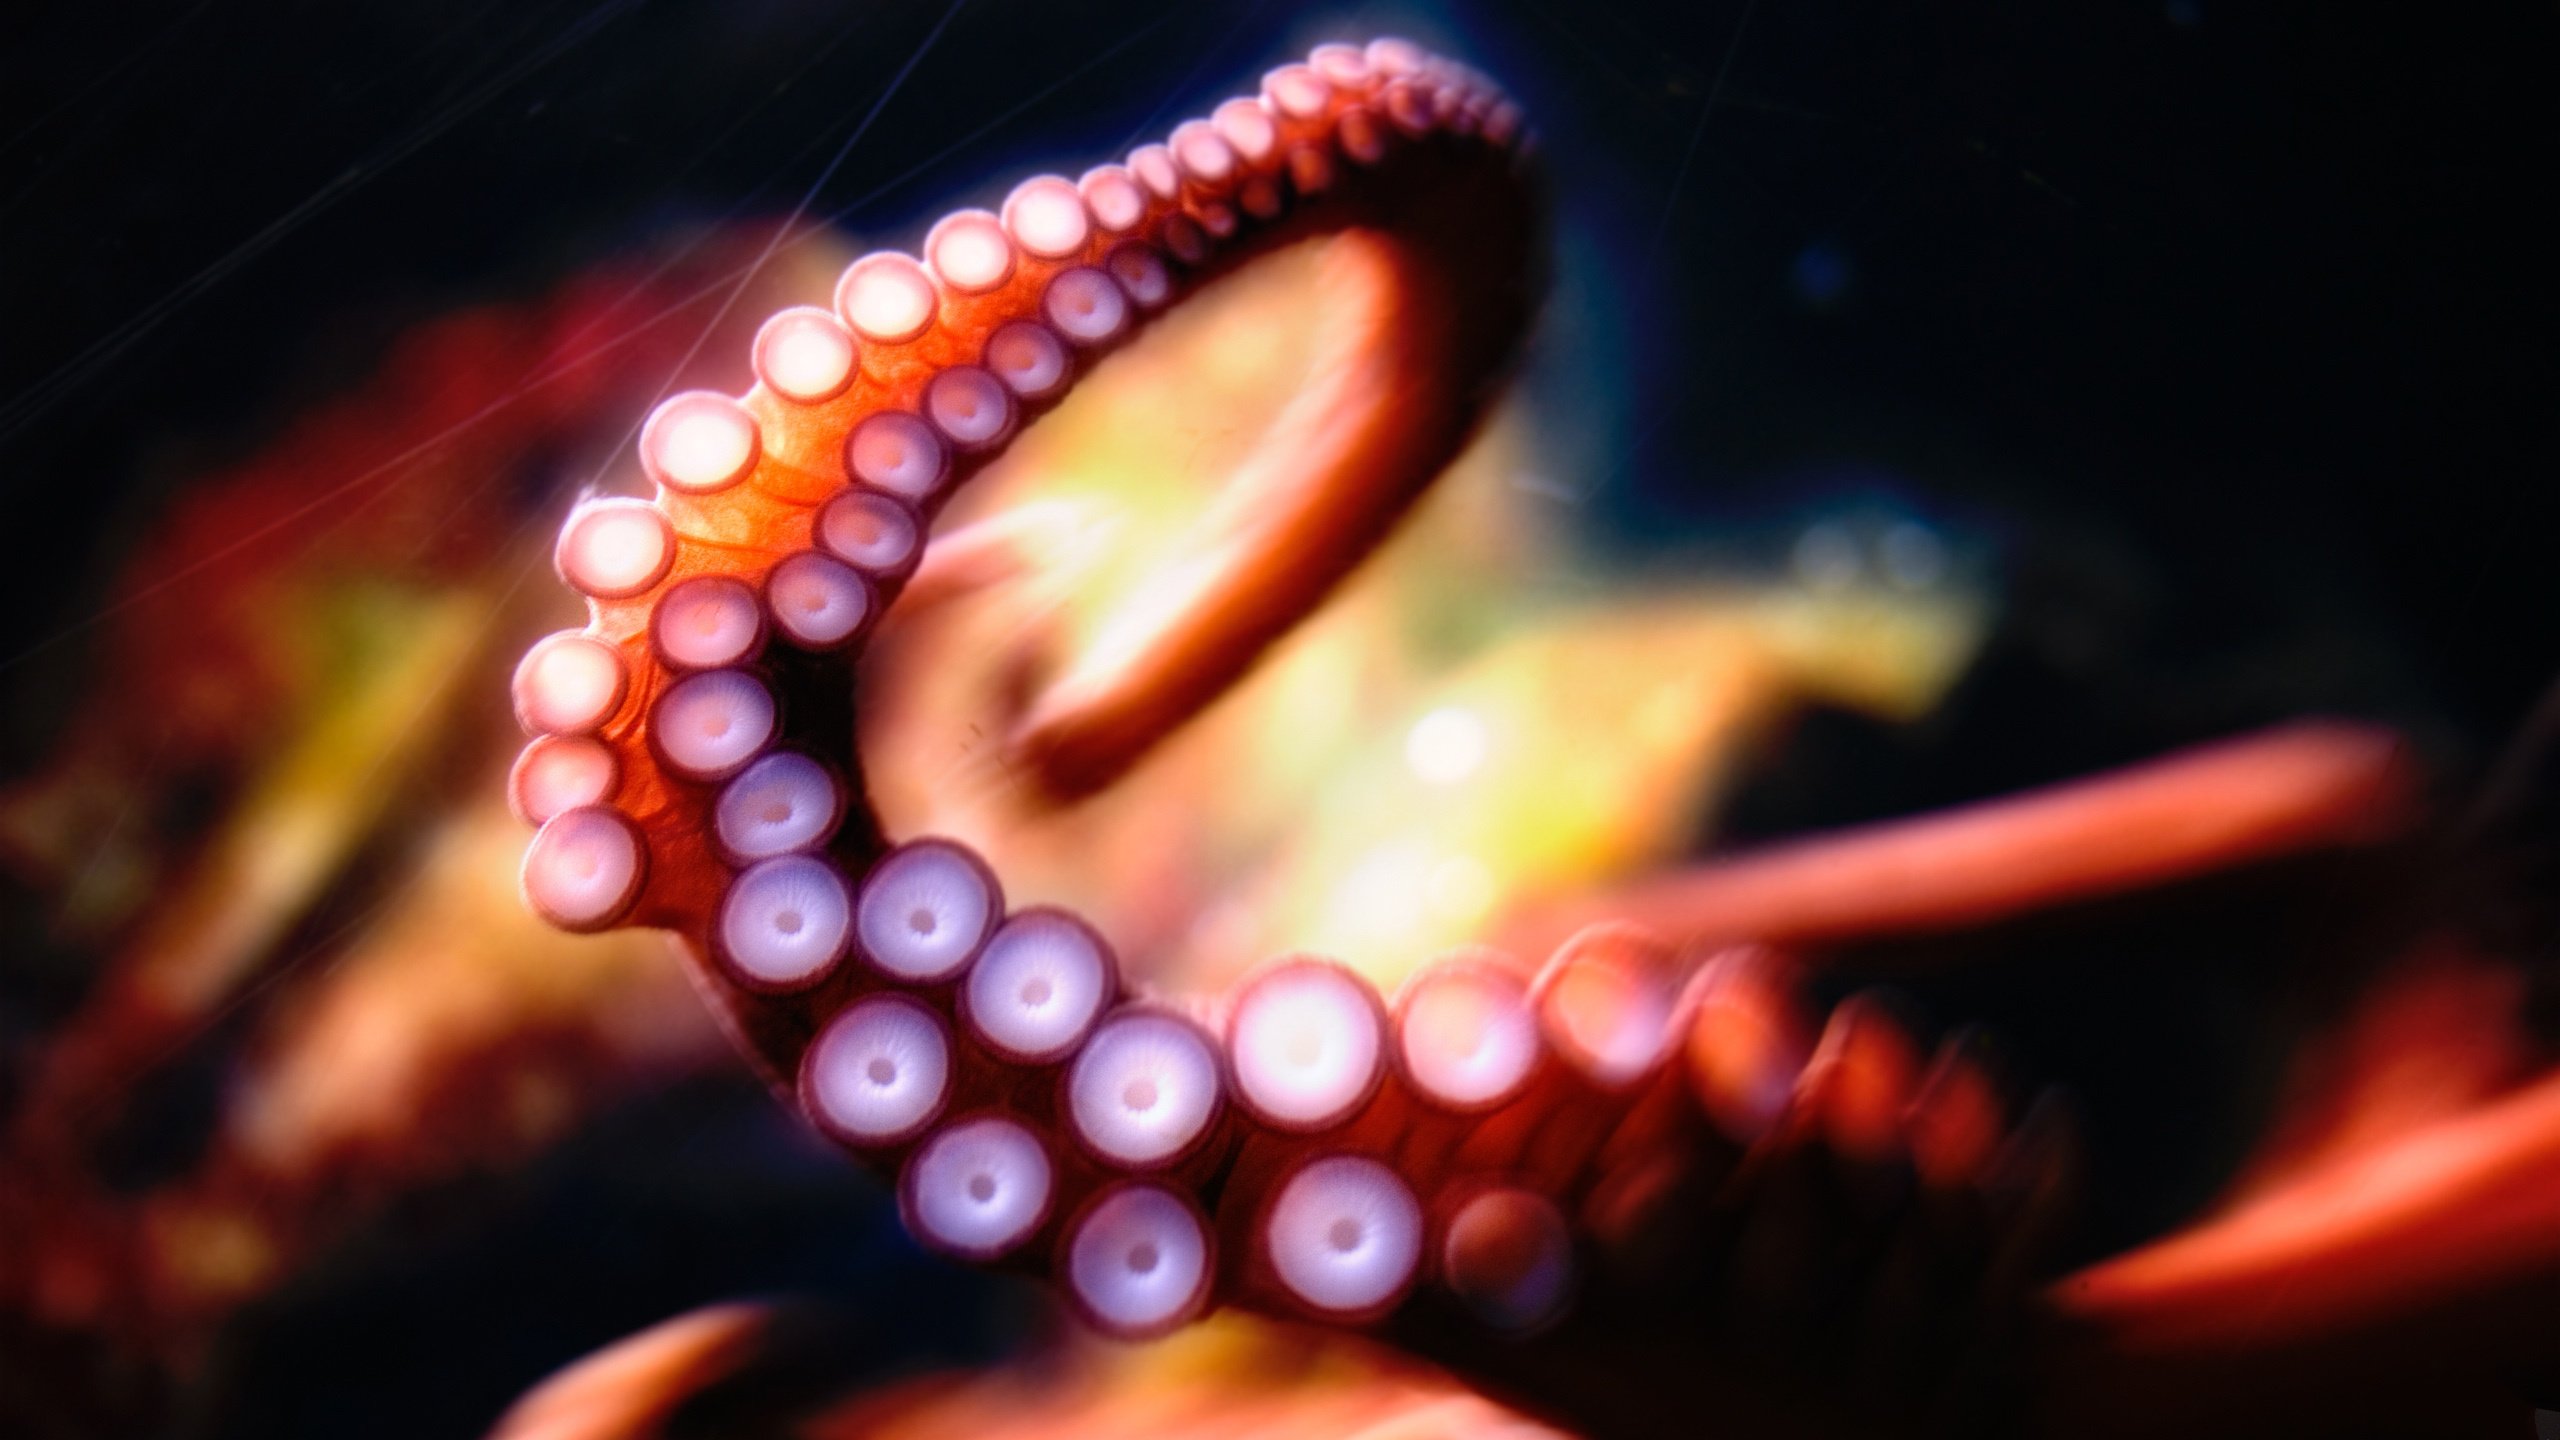 Wallpapers mollusk octopus tentacles on the desktop